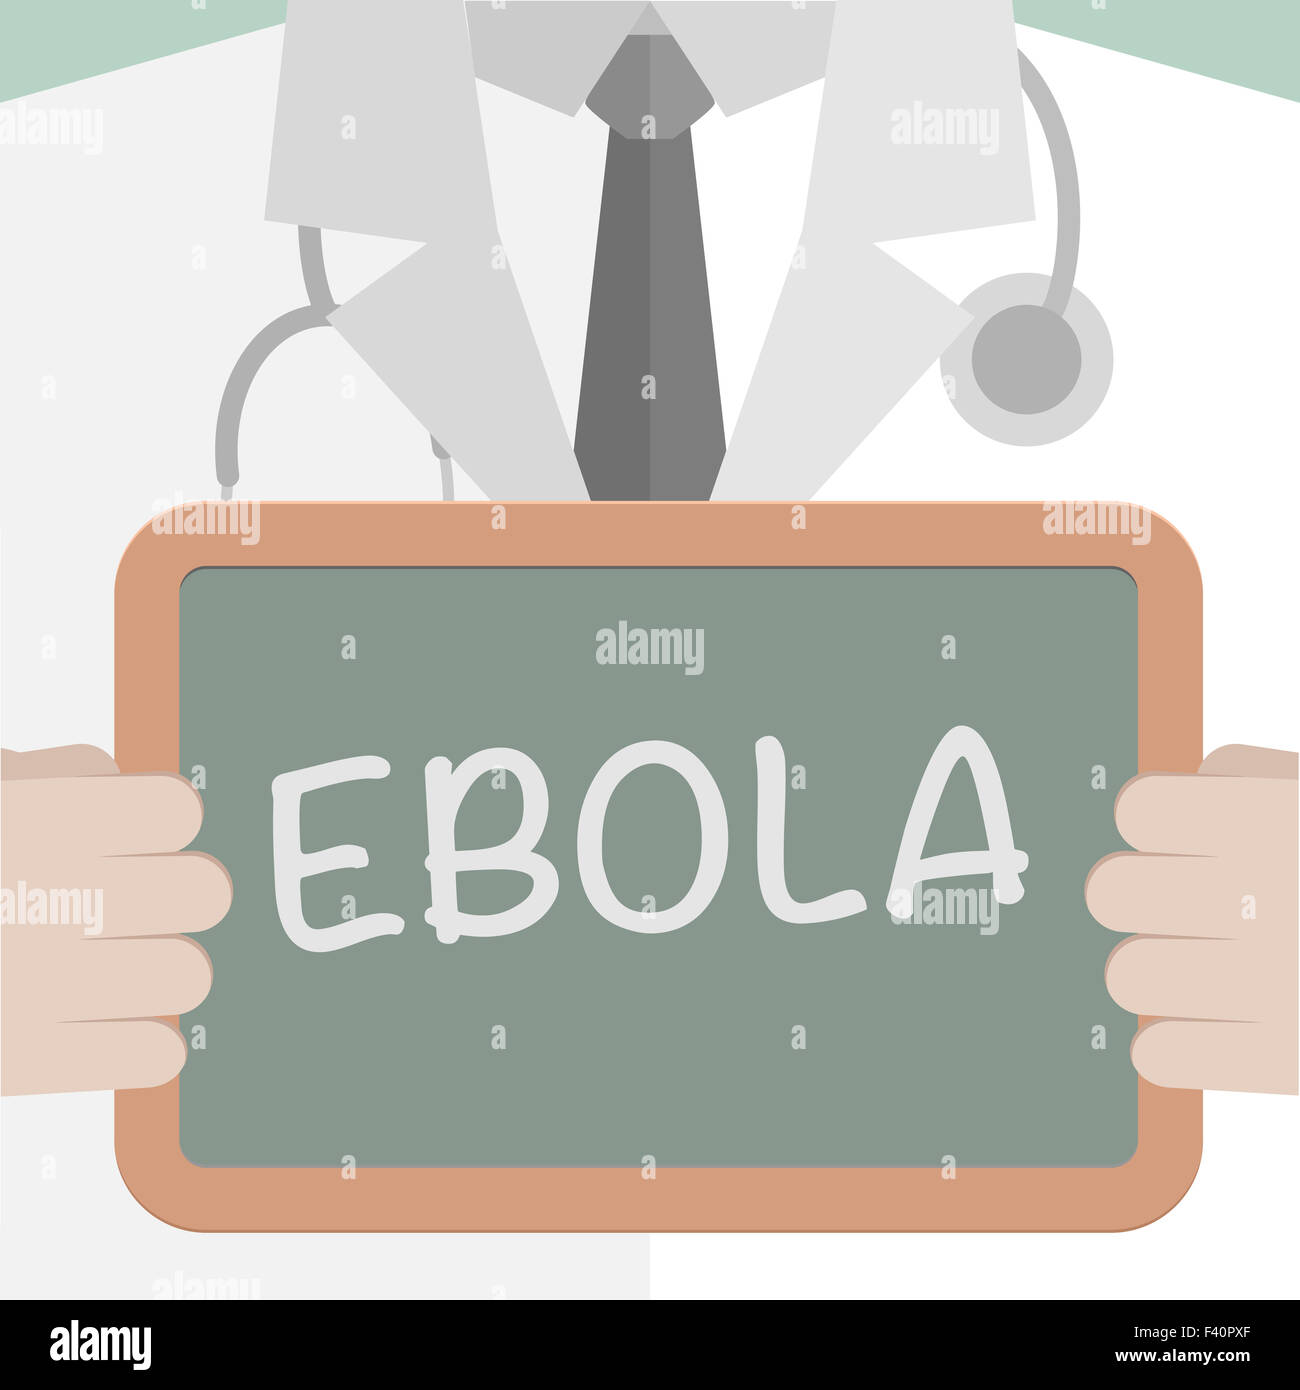 Ebola Stock Photo